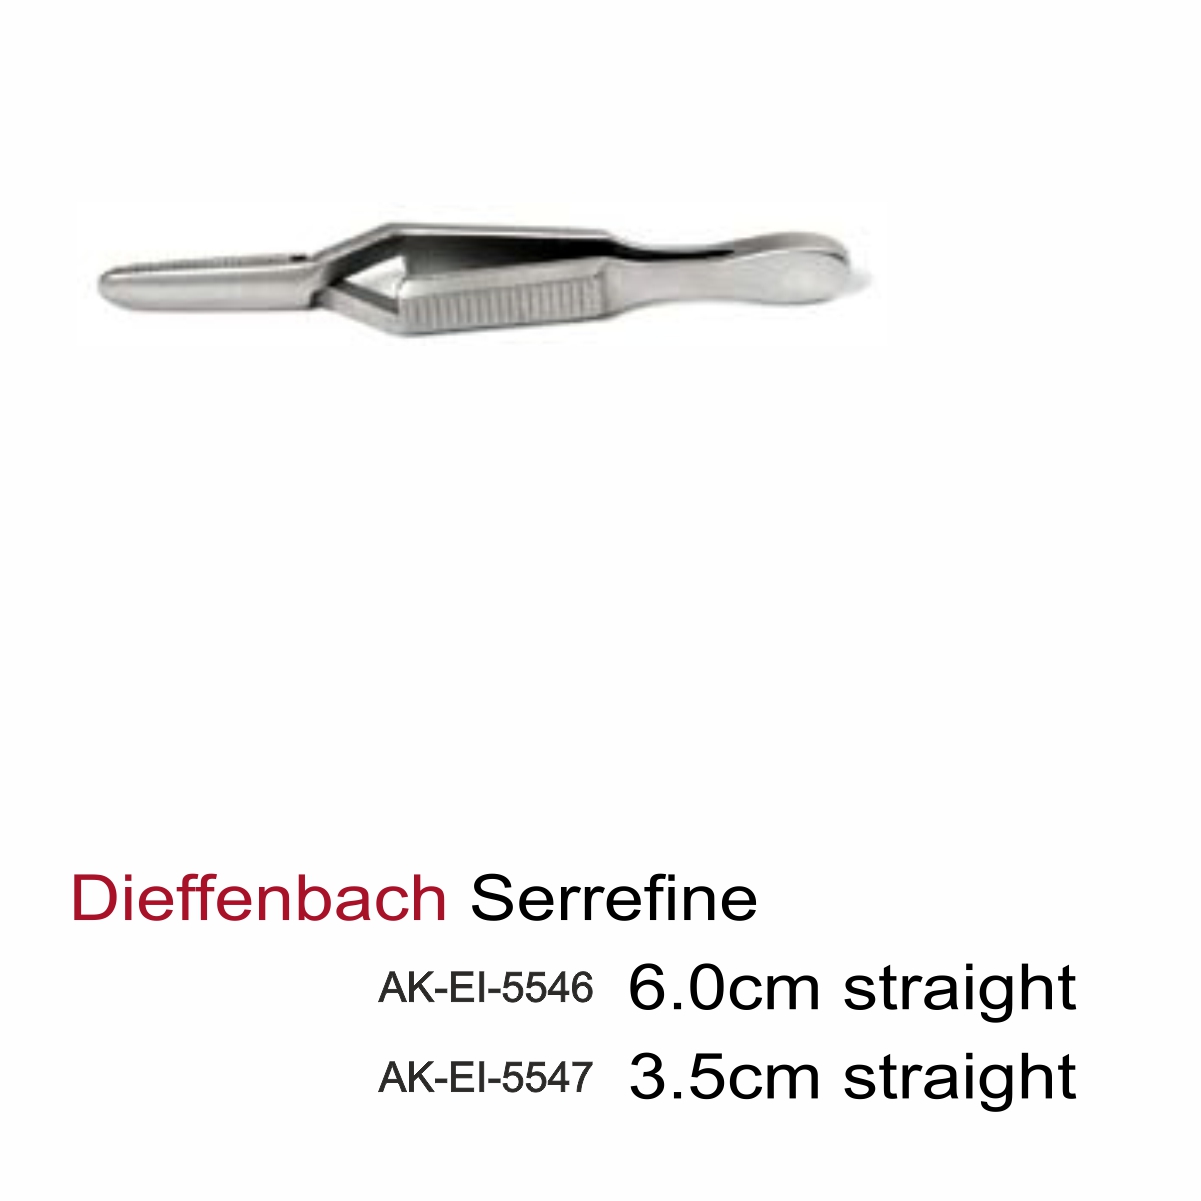 Dieffenbach Serrefine